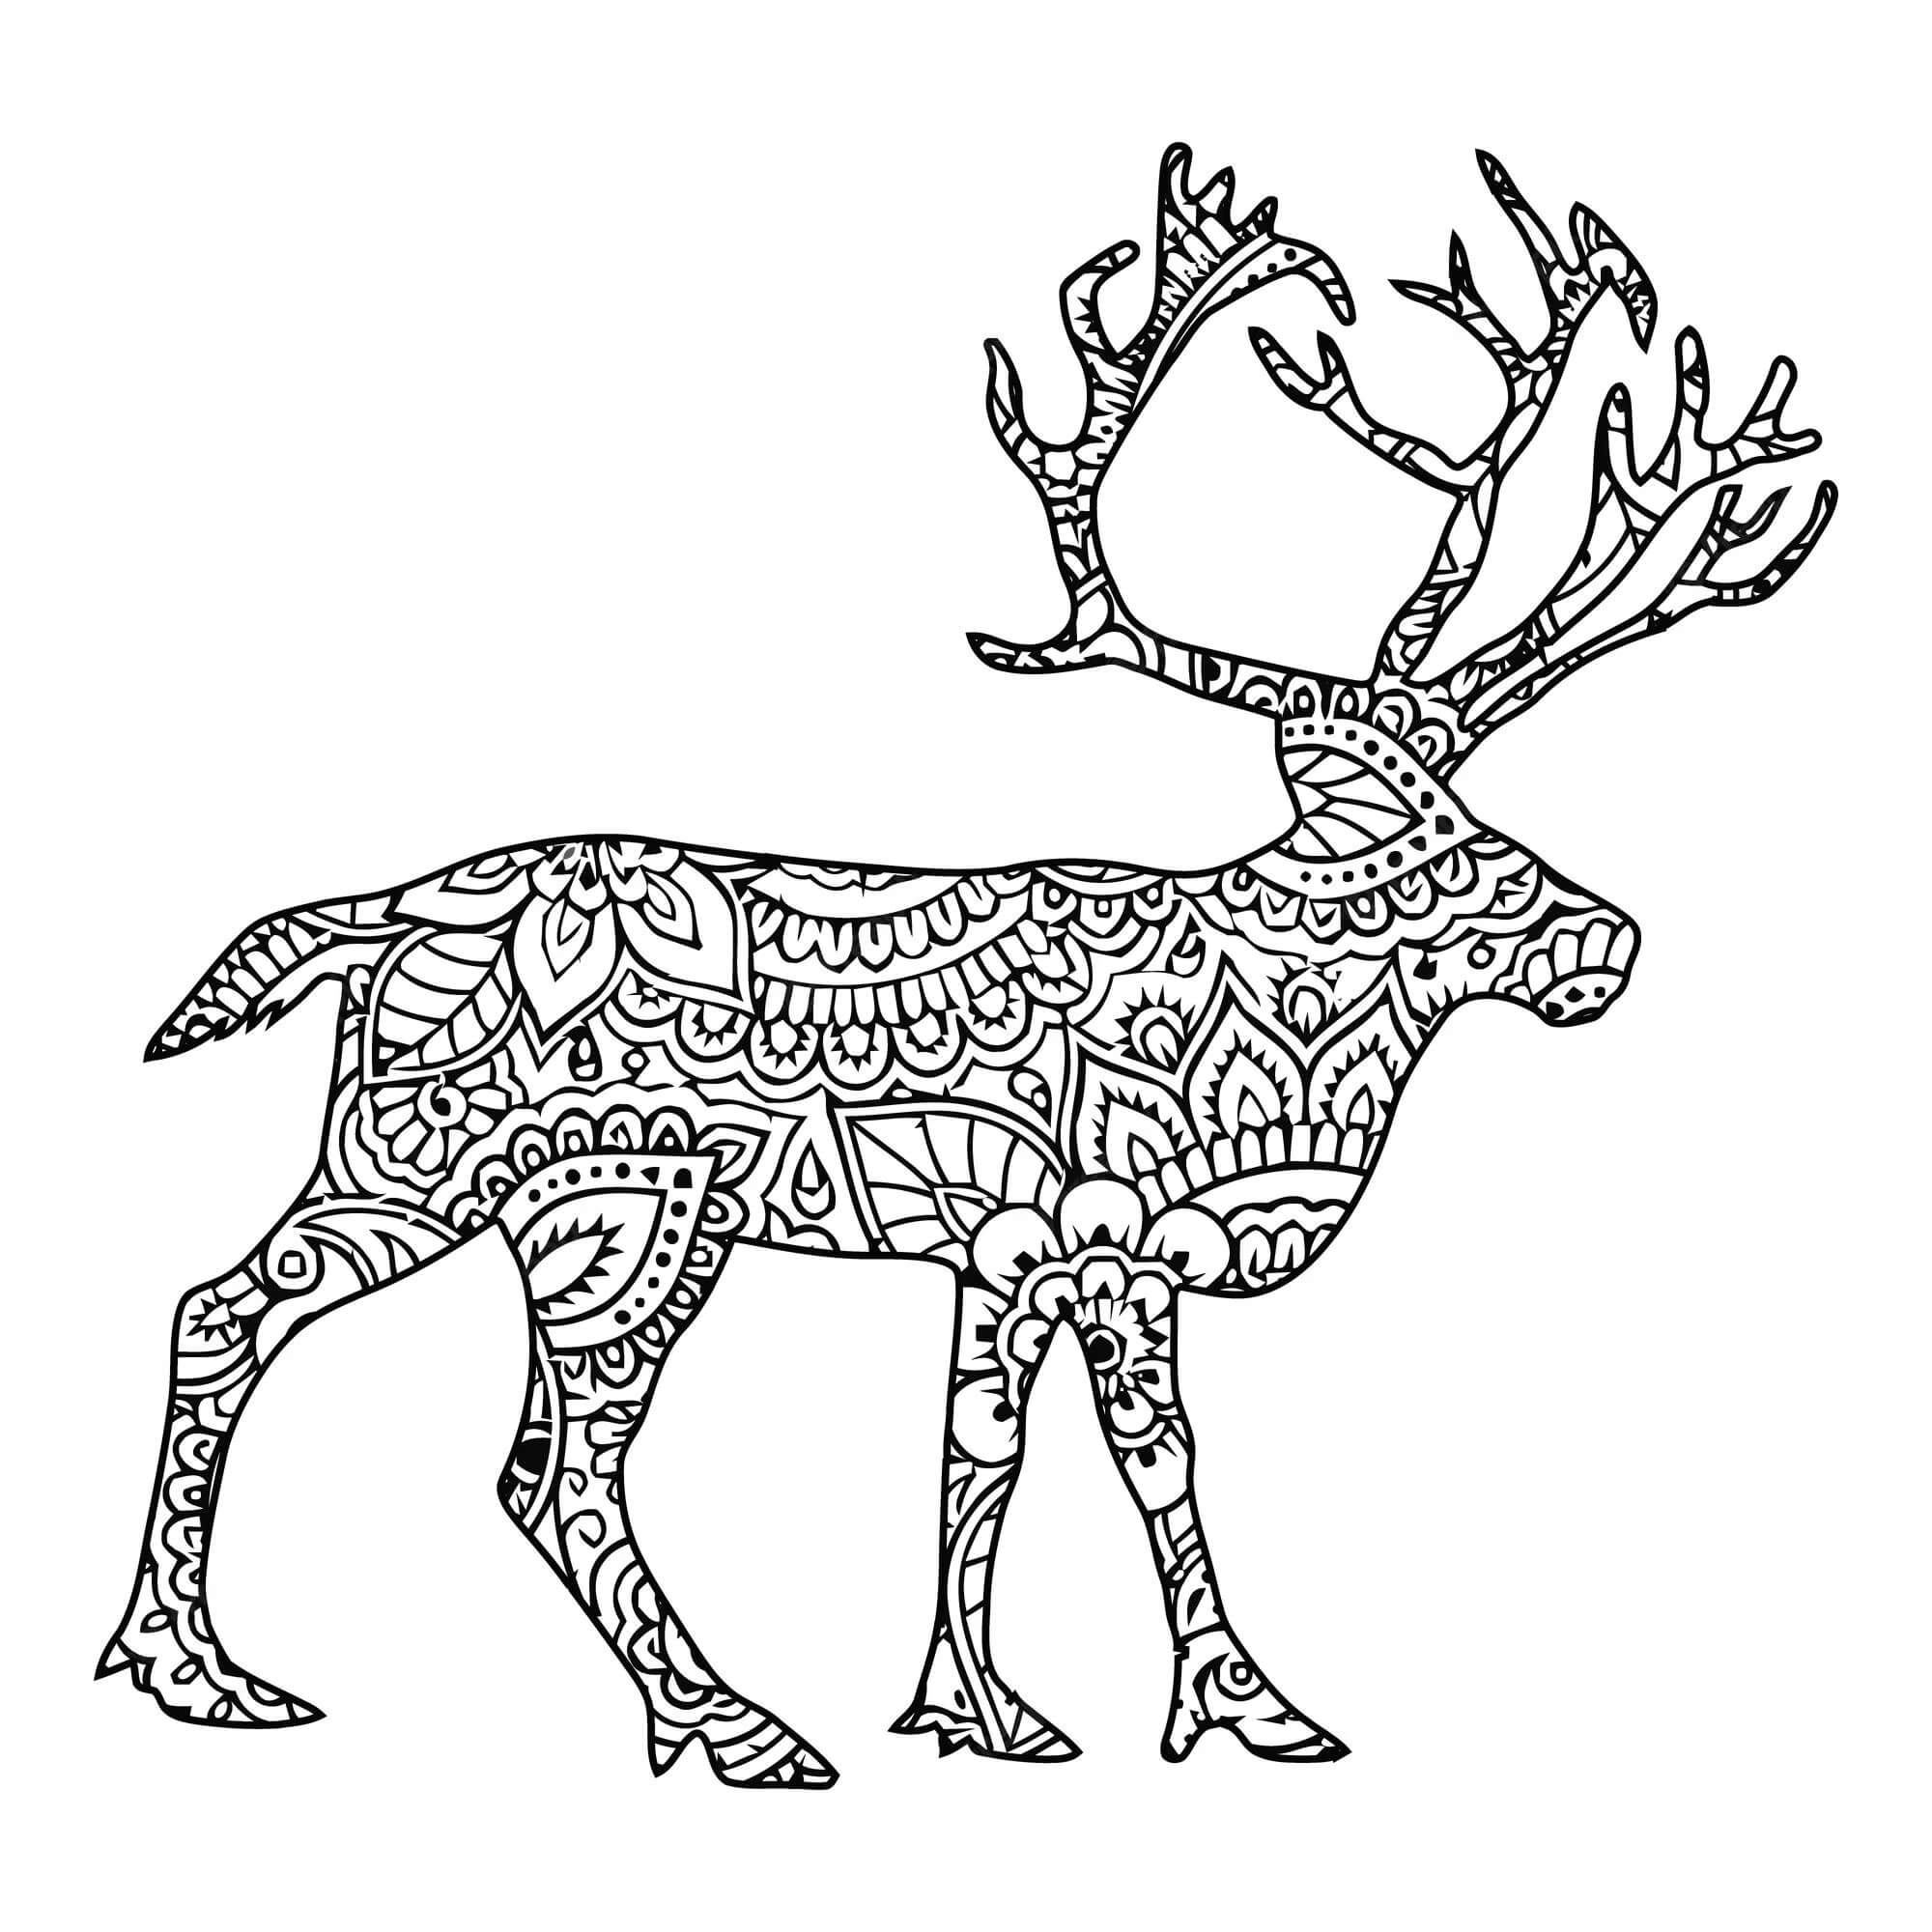 Mandala Deer Coloring Page – Sheet 1 Mandala